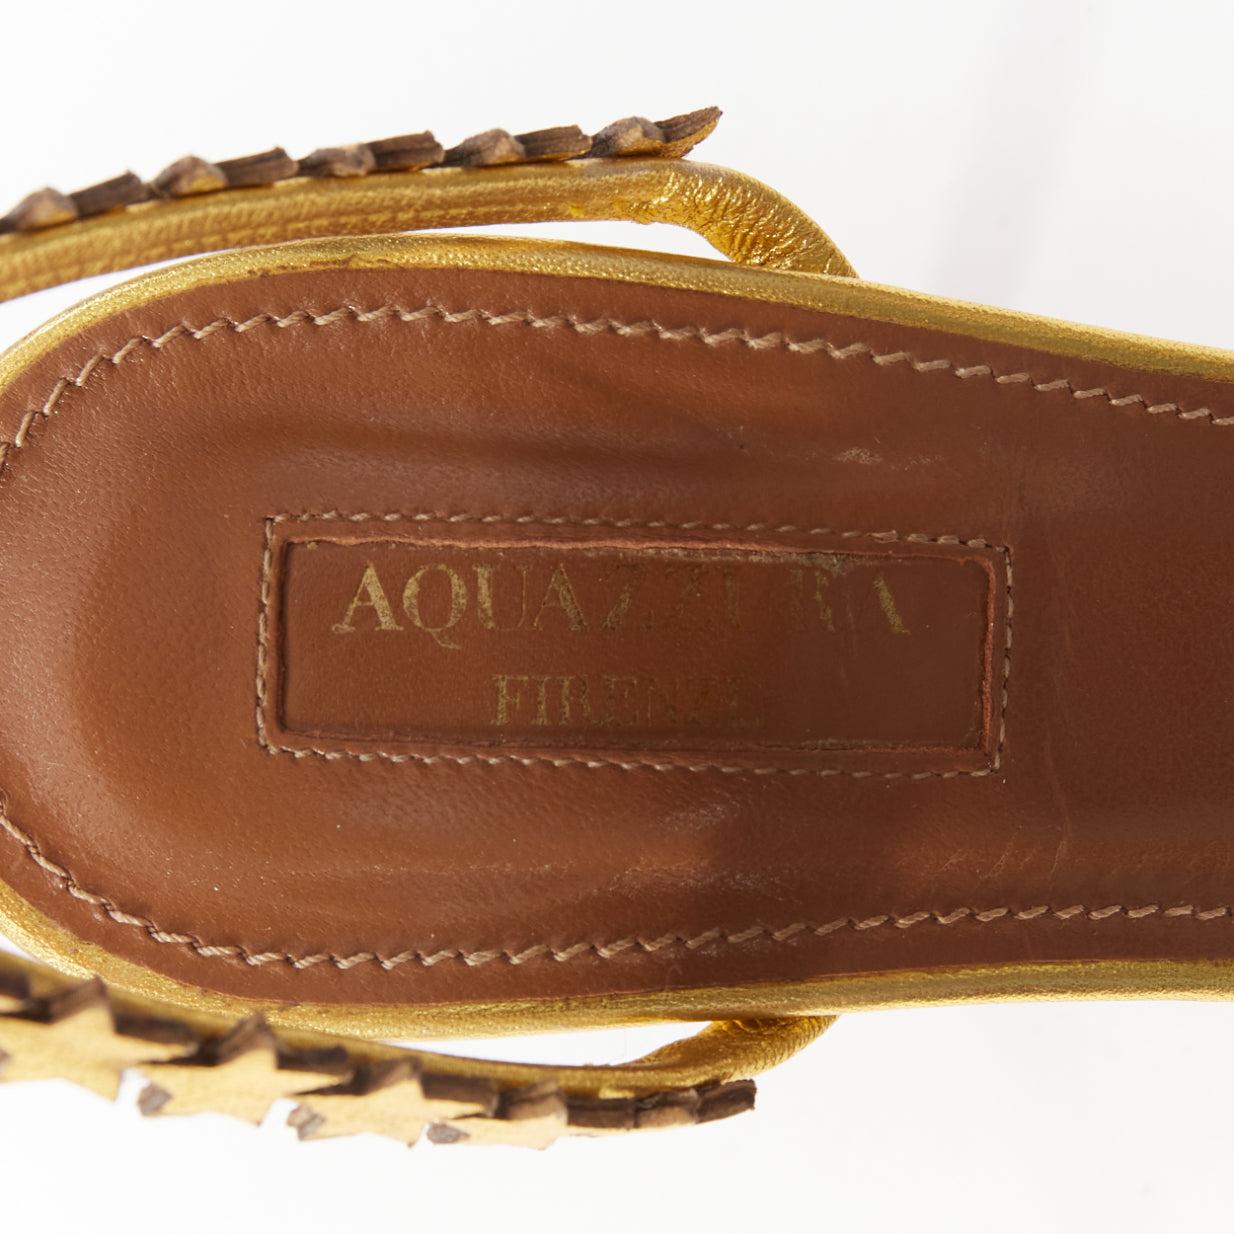 AQUAZZURA Starlight 105 gold leather star cutout strappy sandal heel EU36.5 5